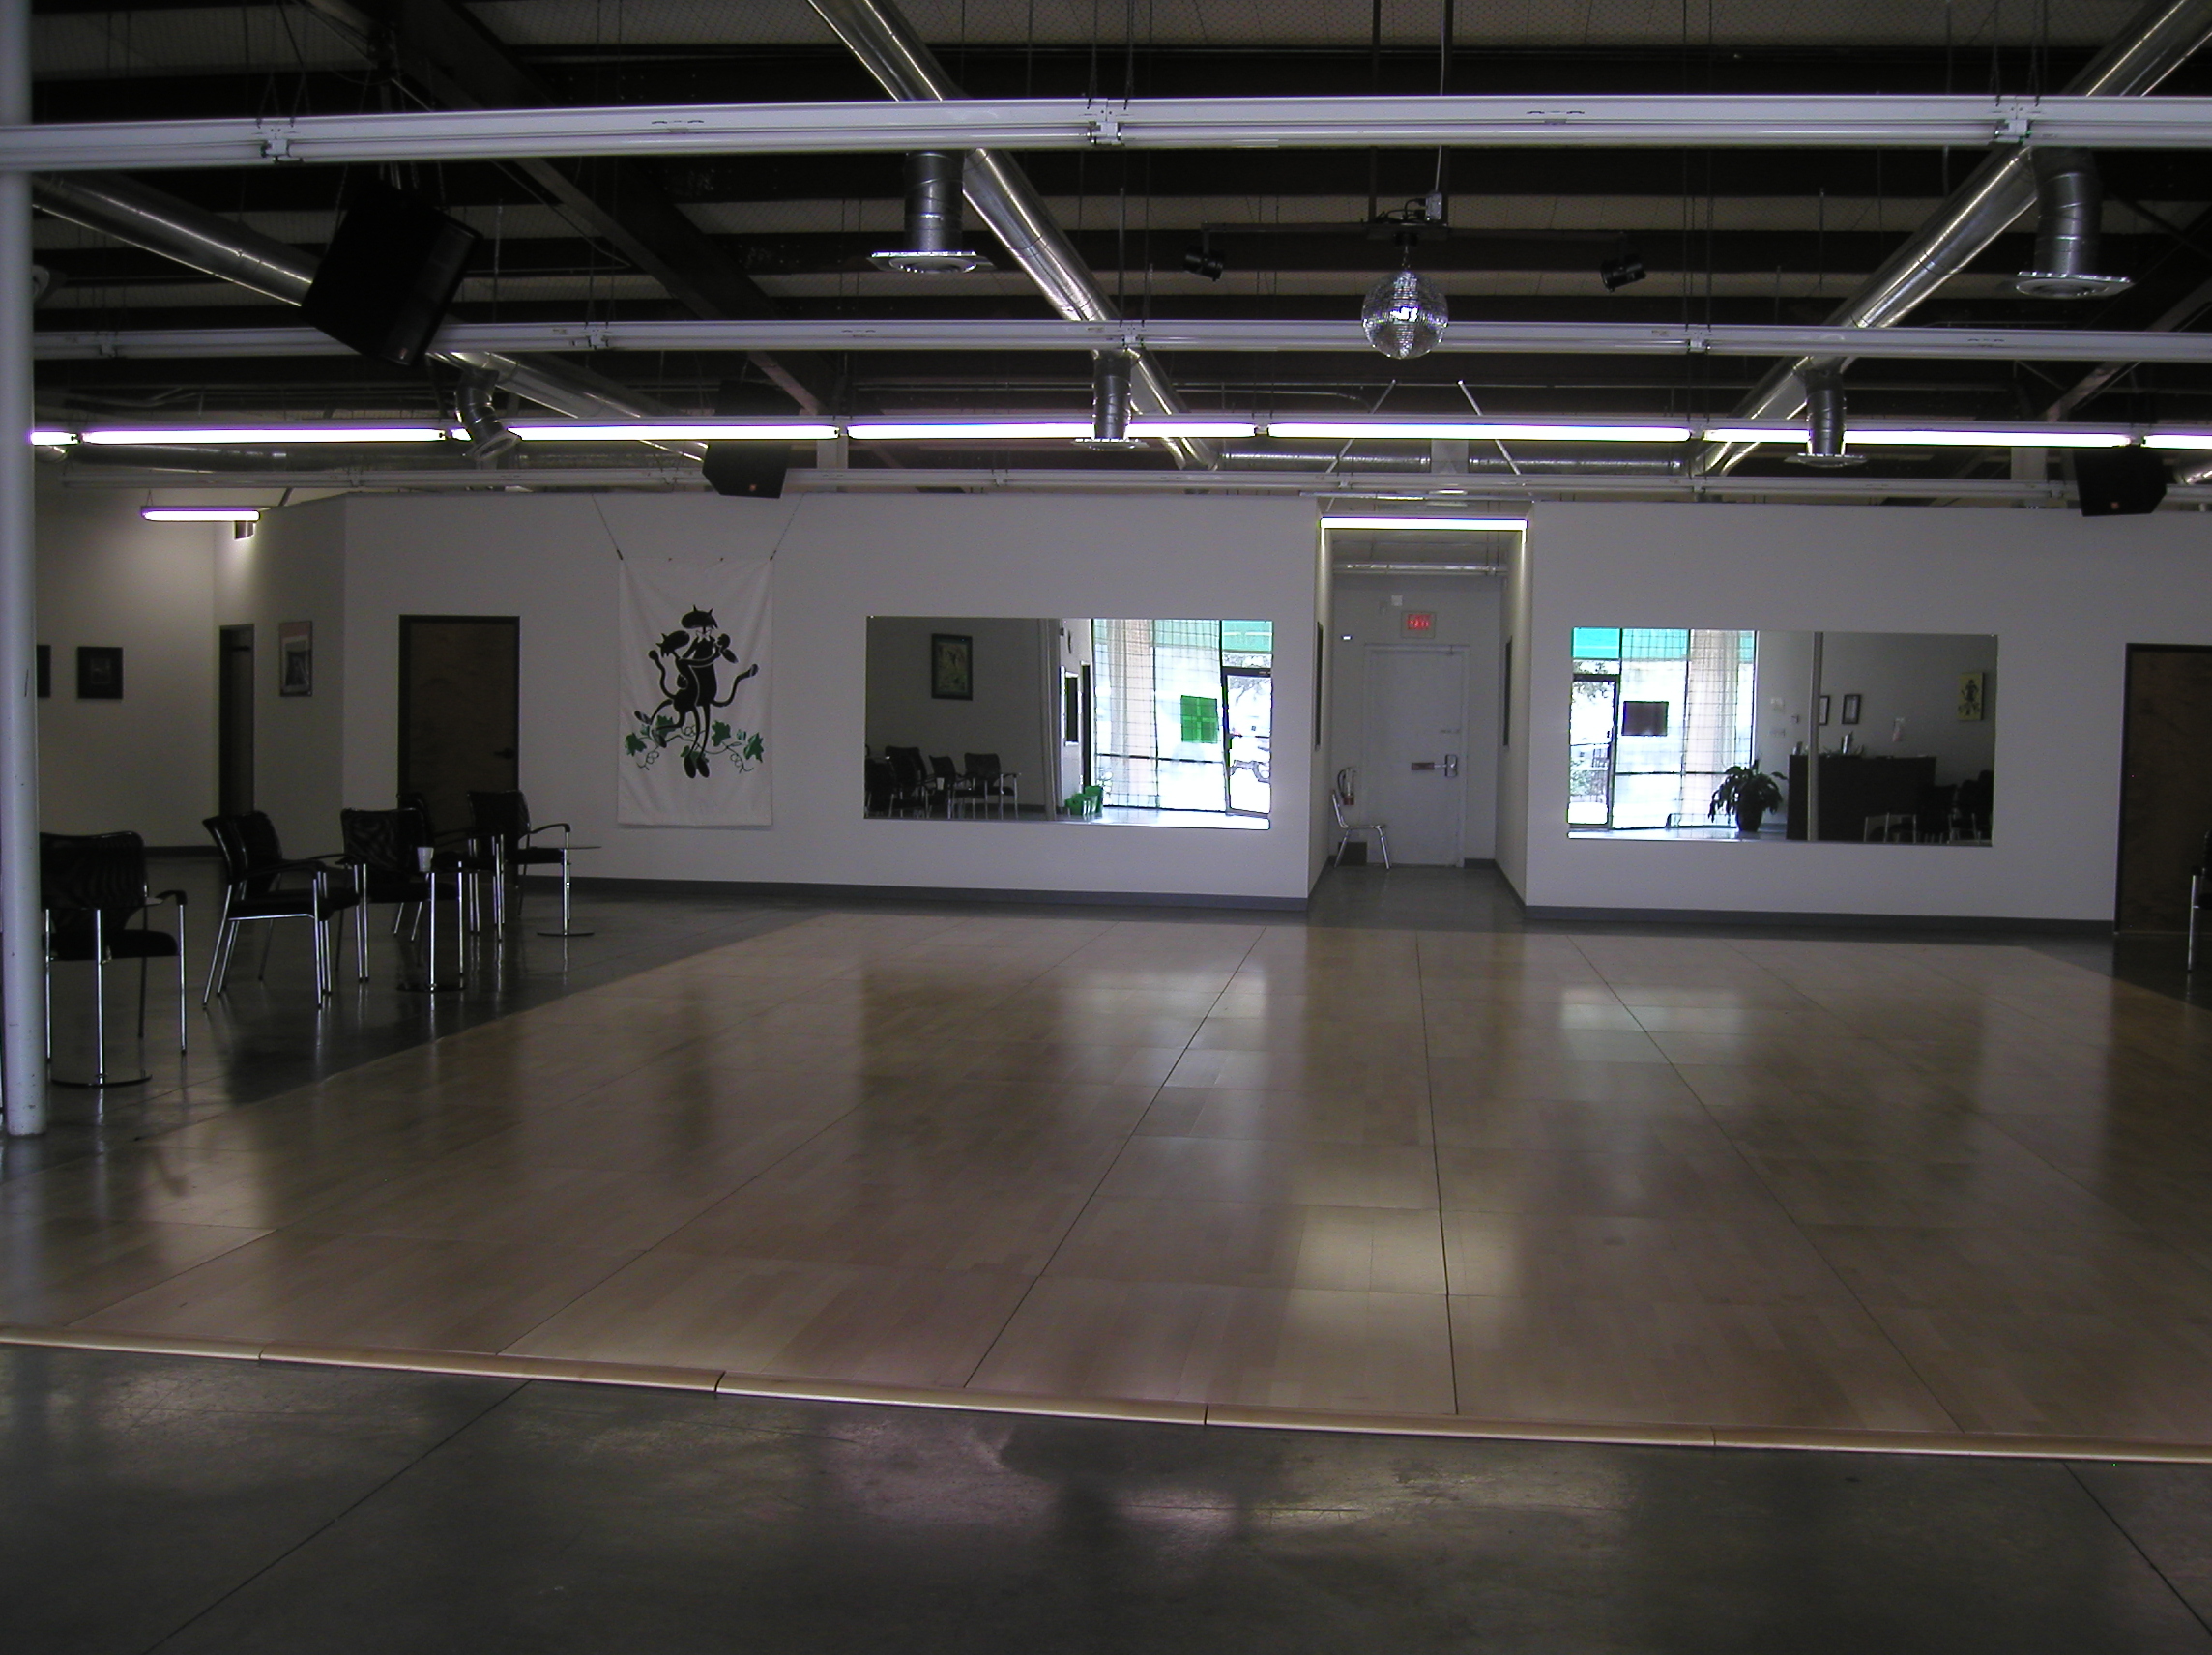 Inside Studio - extra rooms at rear